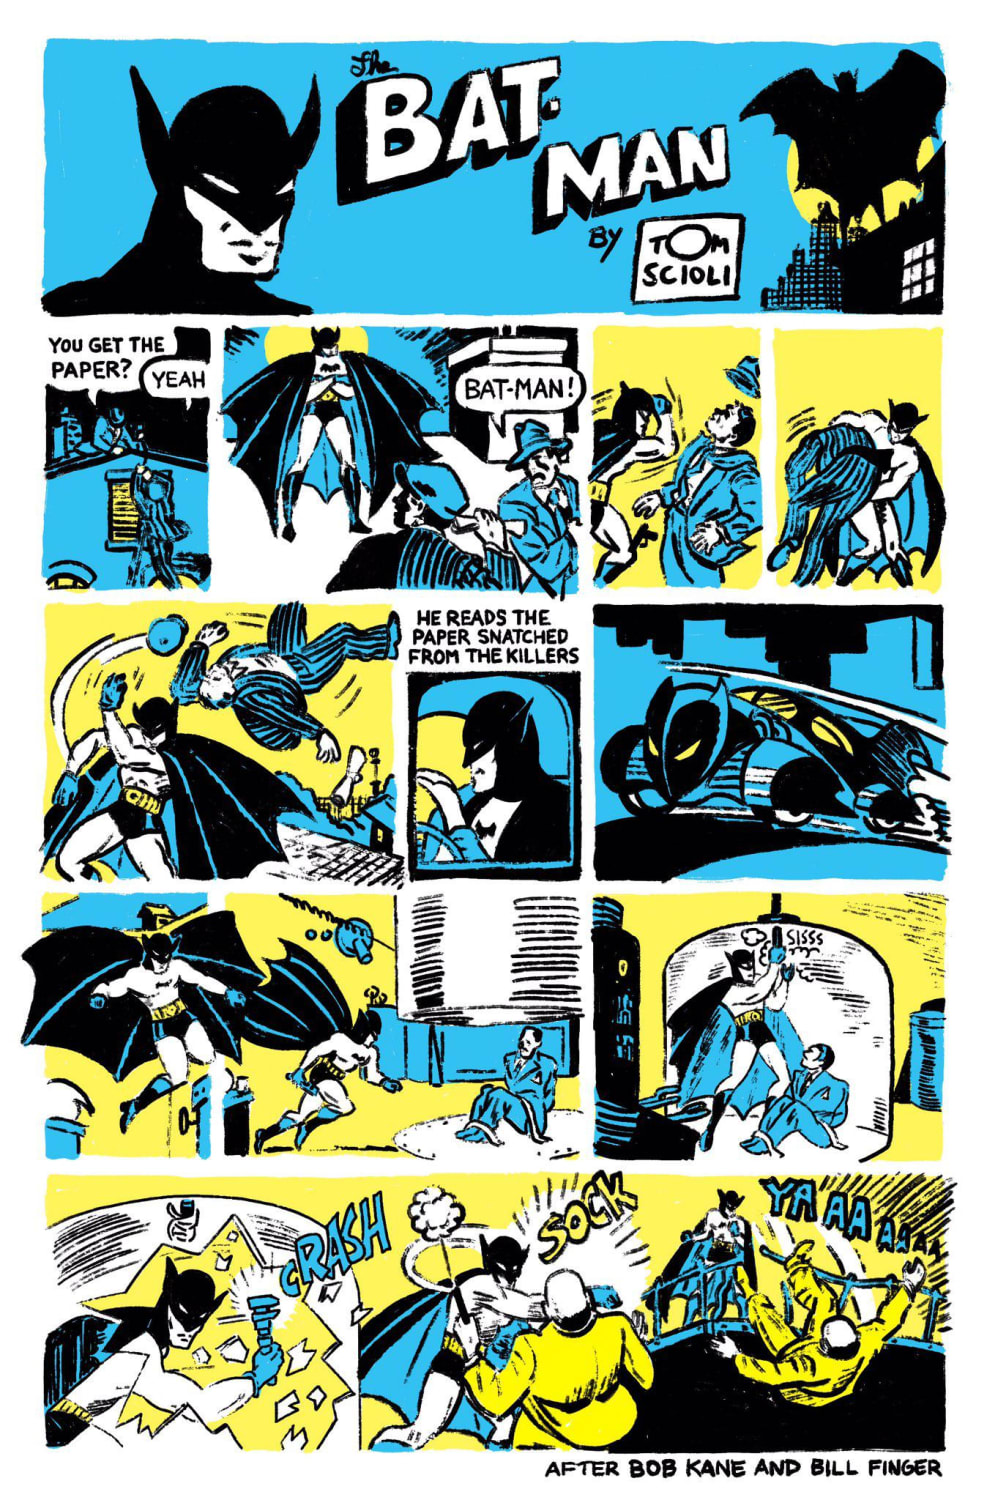 Tom Scioli’s remix of Batman’s first comic book appearance in DETECTIVE COMICS #27 (1939)